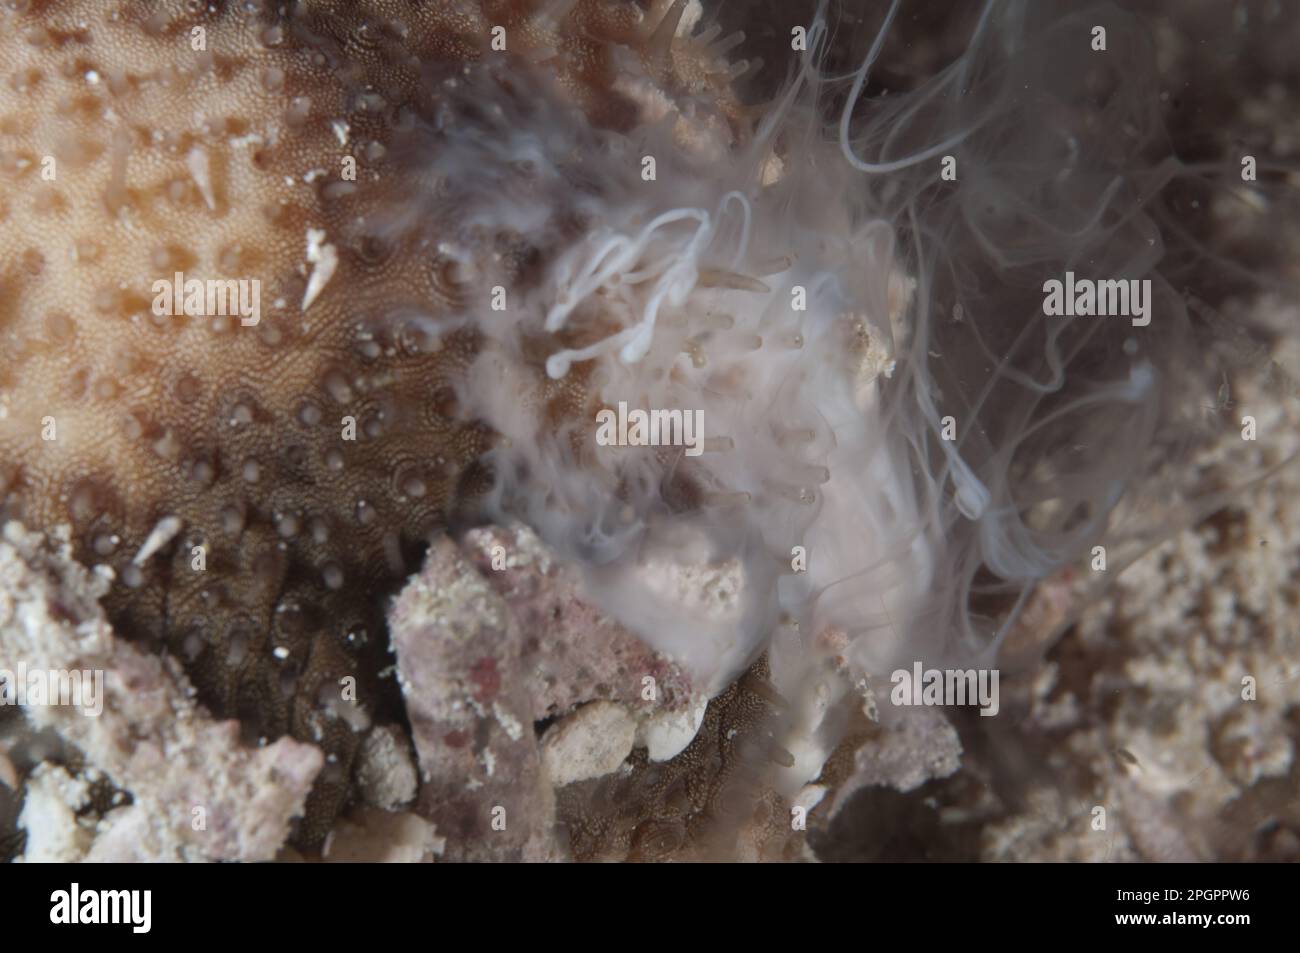 Brown sandfish (Bohadschia marmorata), Raja Ampat, Marbled Sea Cucumber, Marbled sea cucumbers (Holothuroidea), Marbled Sea Cucumbers, Other Animals Stock Photo